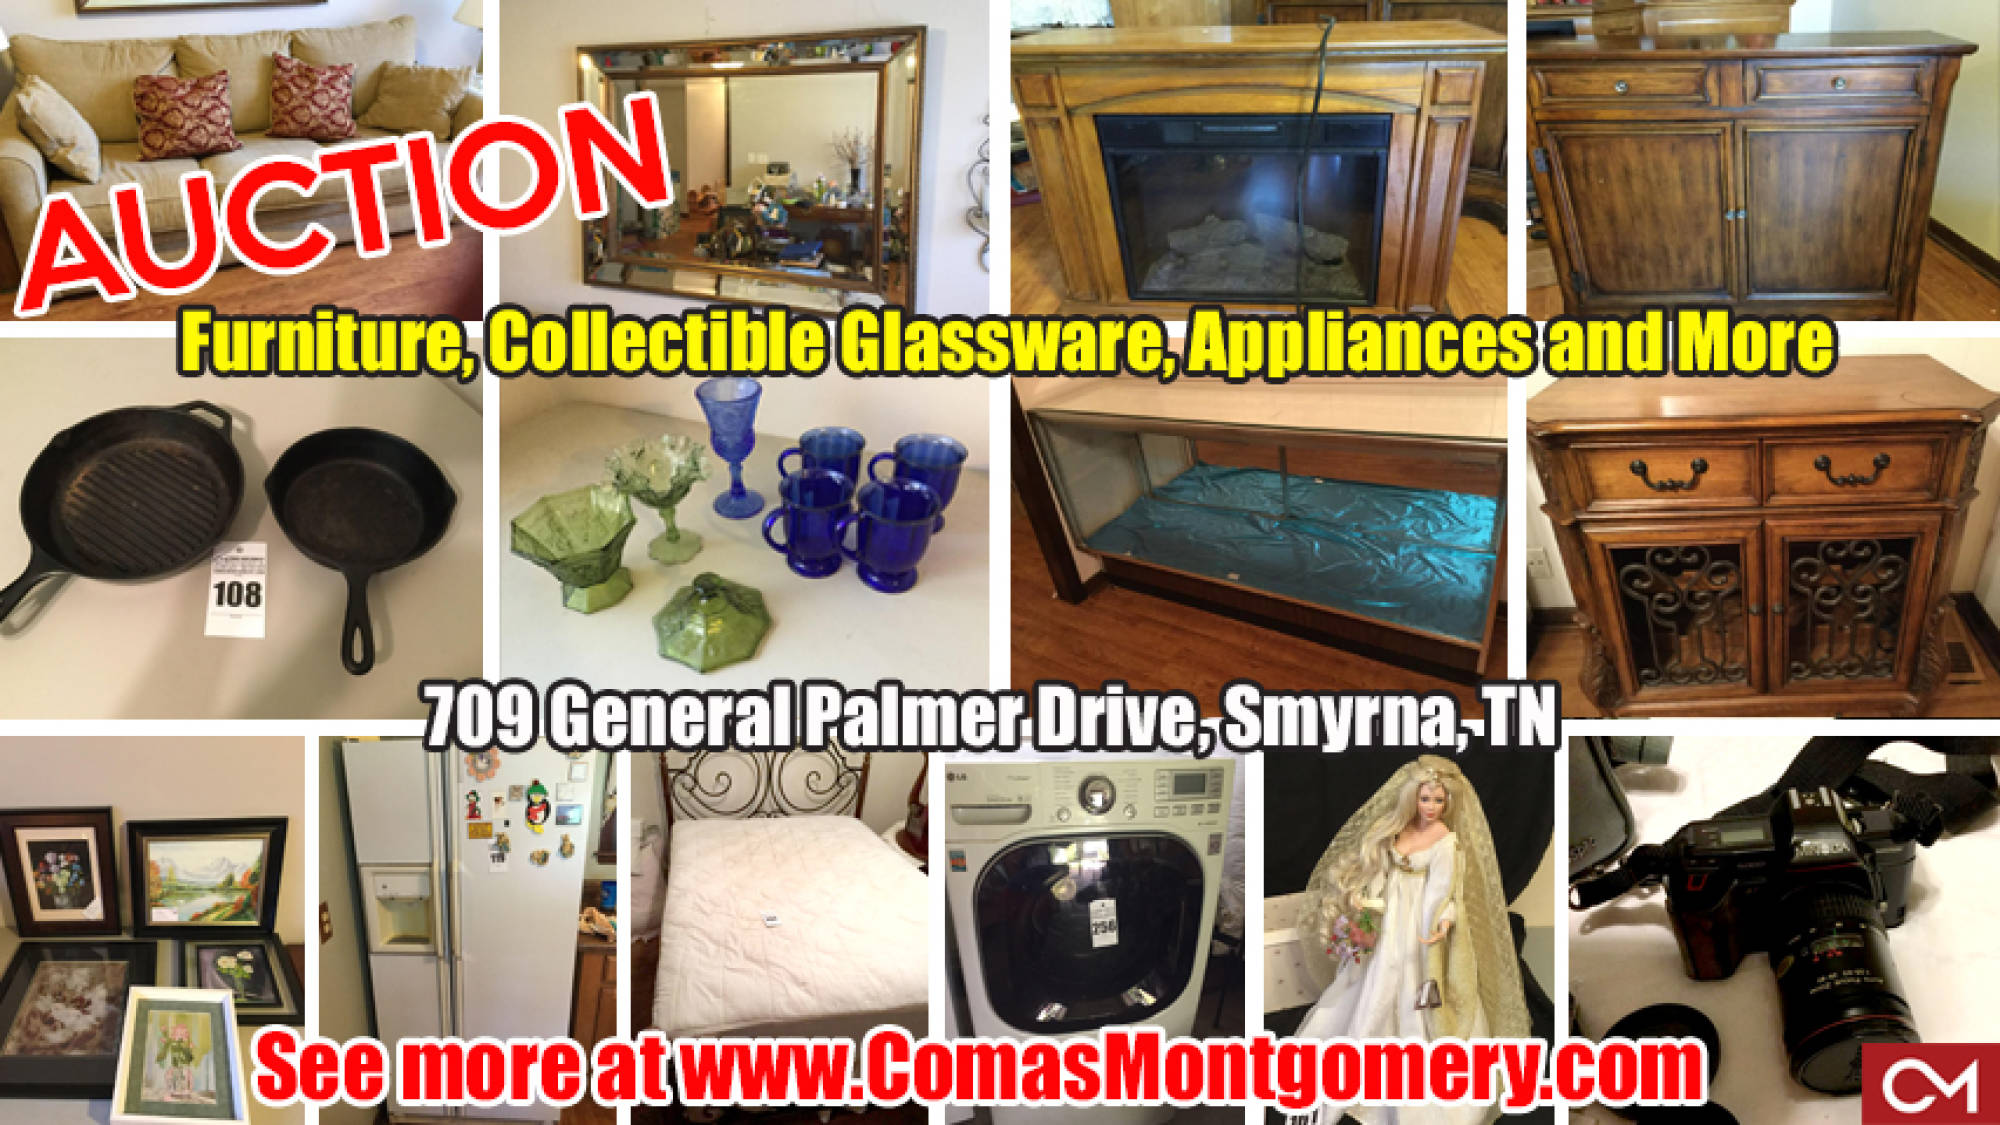 Auction, Estate, Furniture, Appliances, Glassware, Cast Iron, Dolls, Collectibles, Smyrna, Tennessee, Comas, Montgomery